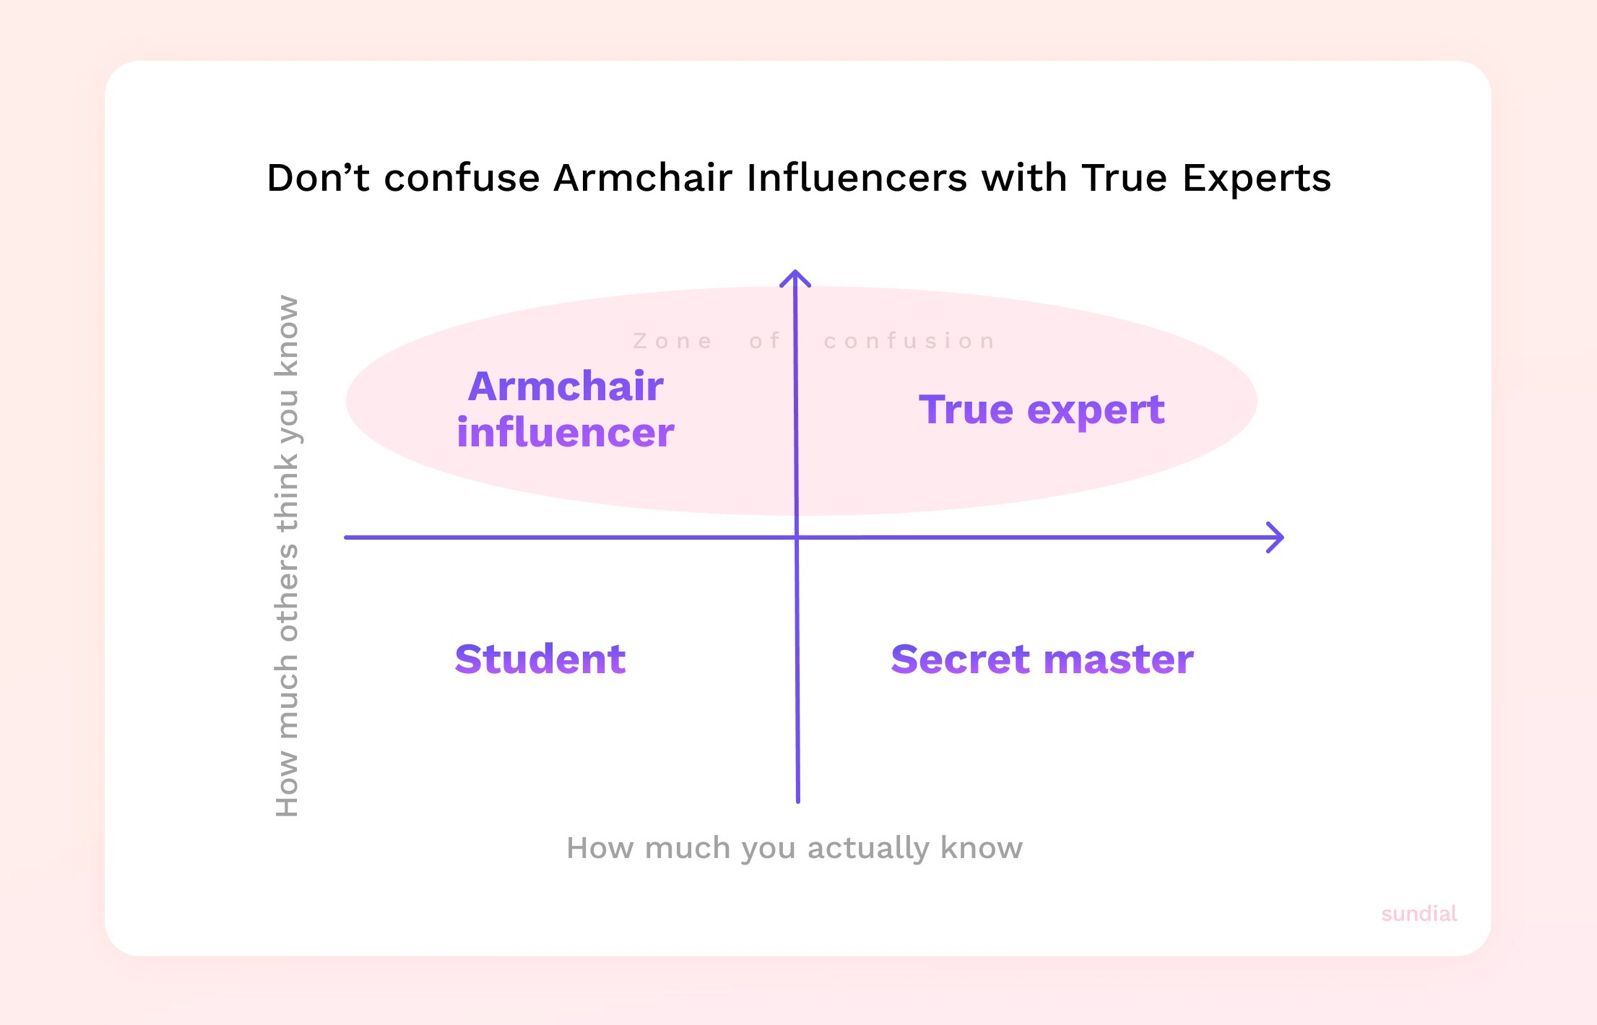 Armchair Influencers vs. True Experts ©sundial